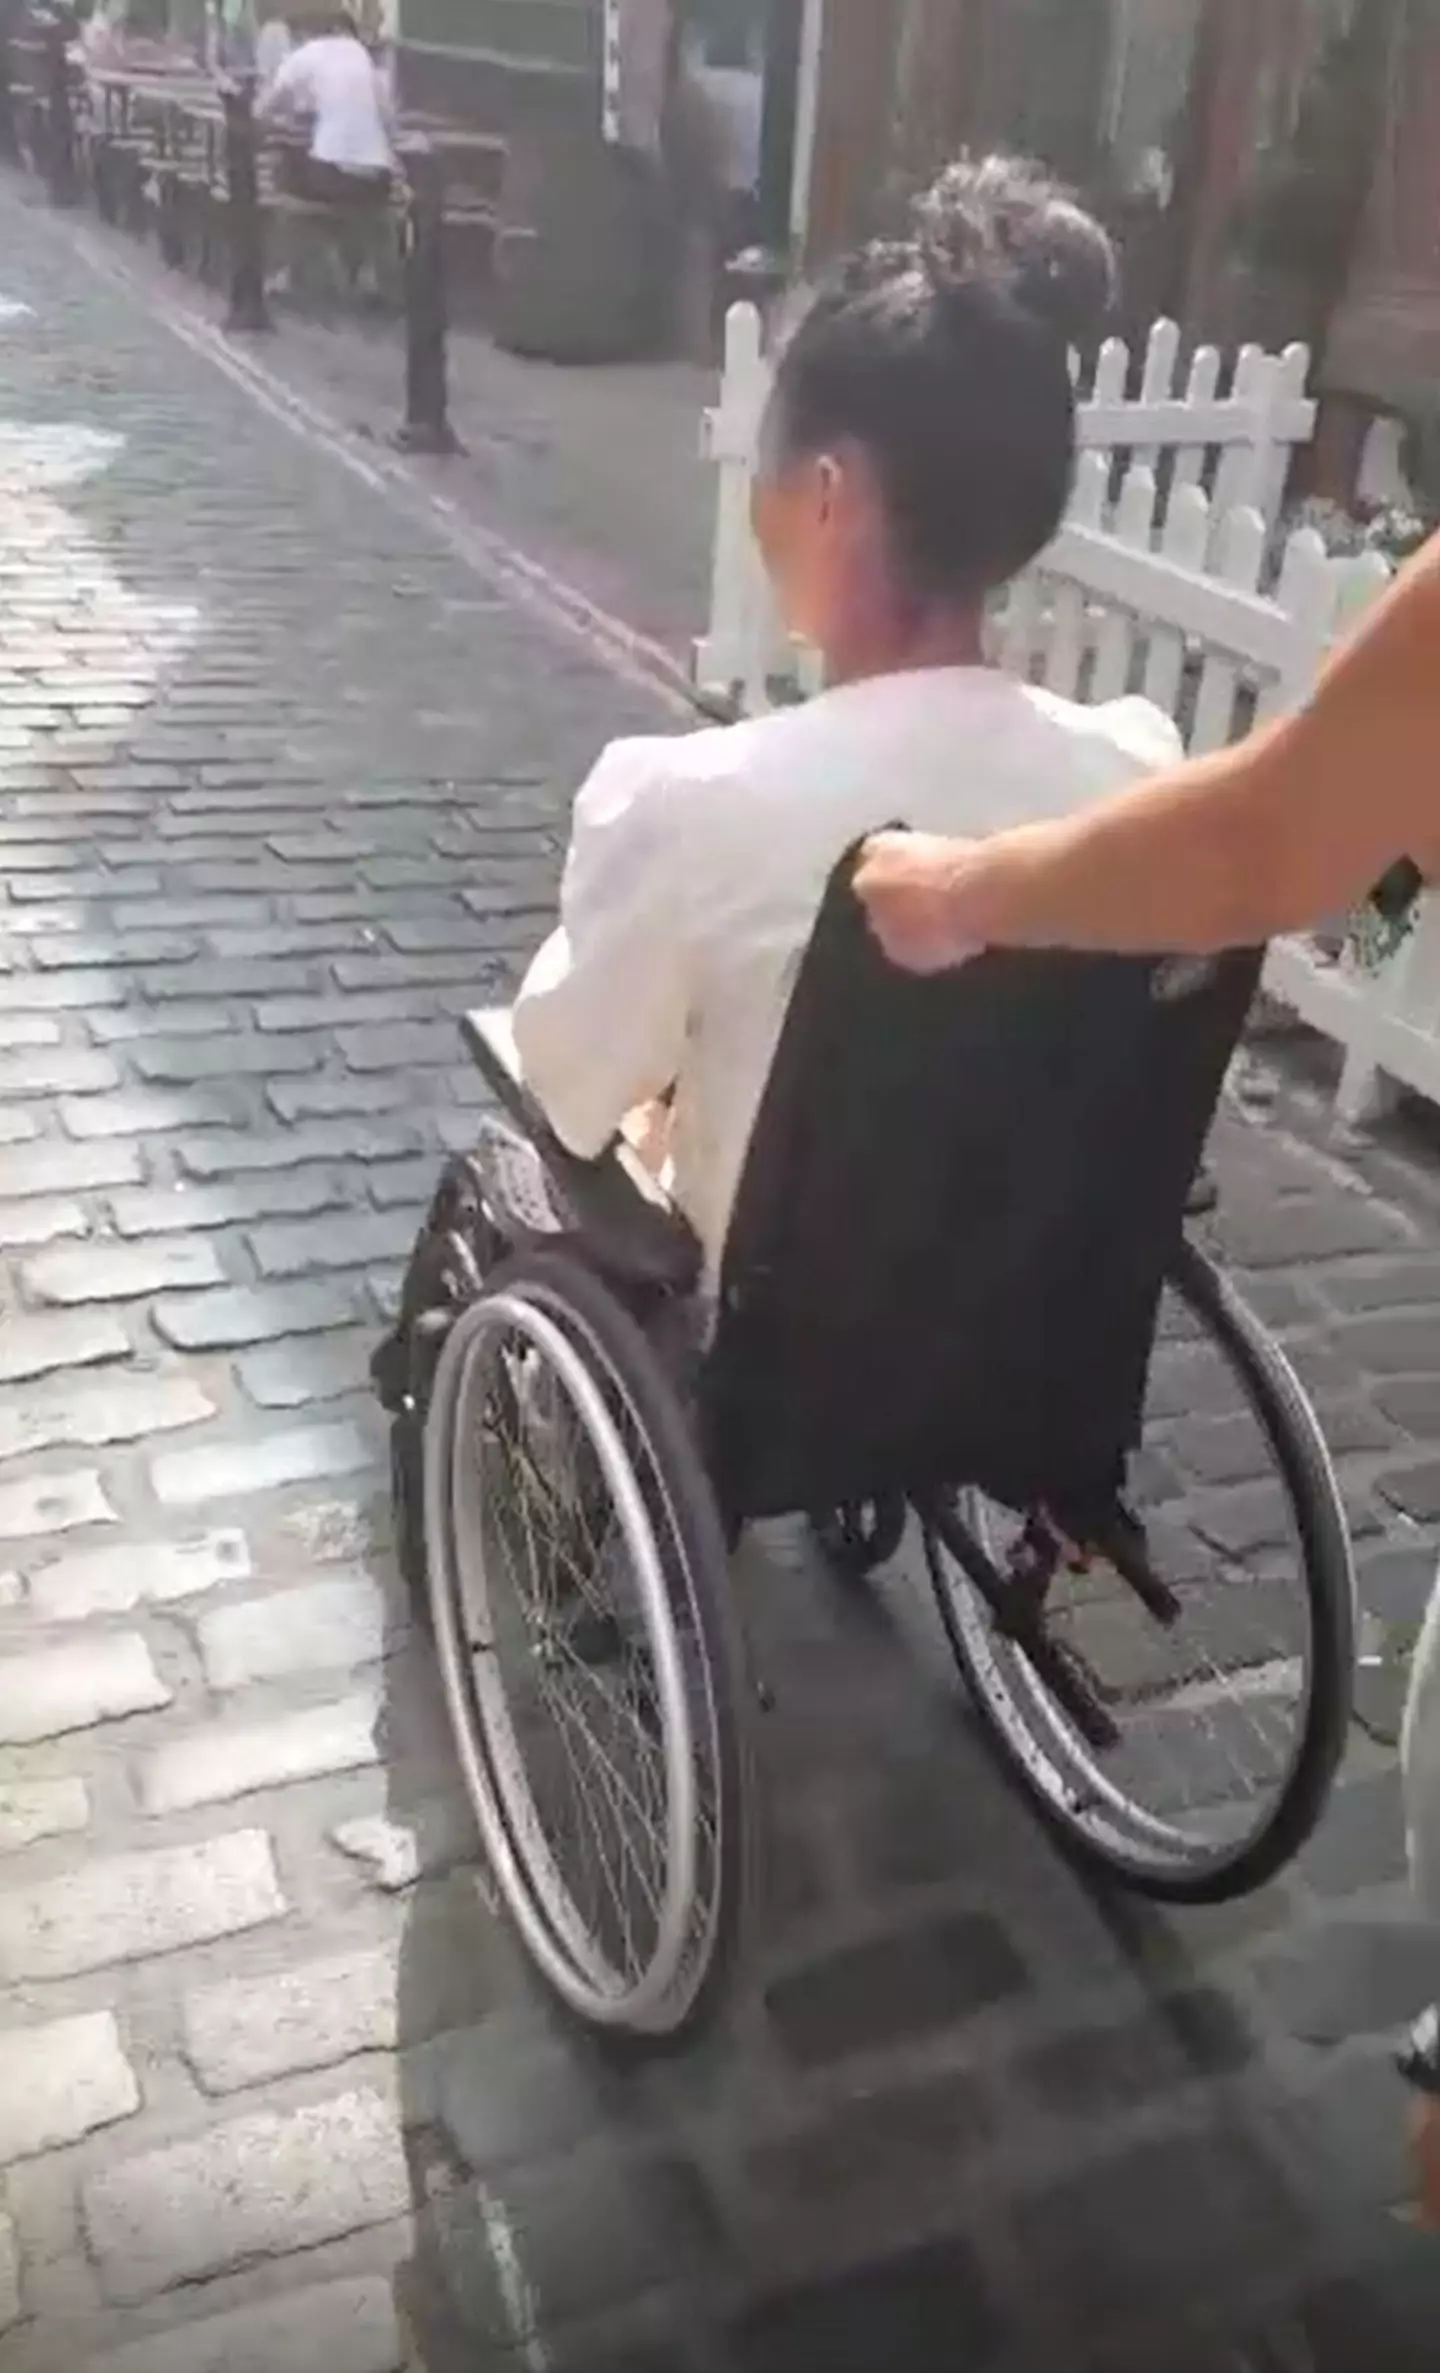 Yasmine must now use a wheelchair.